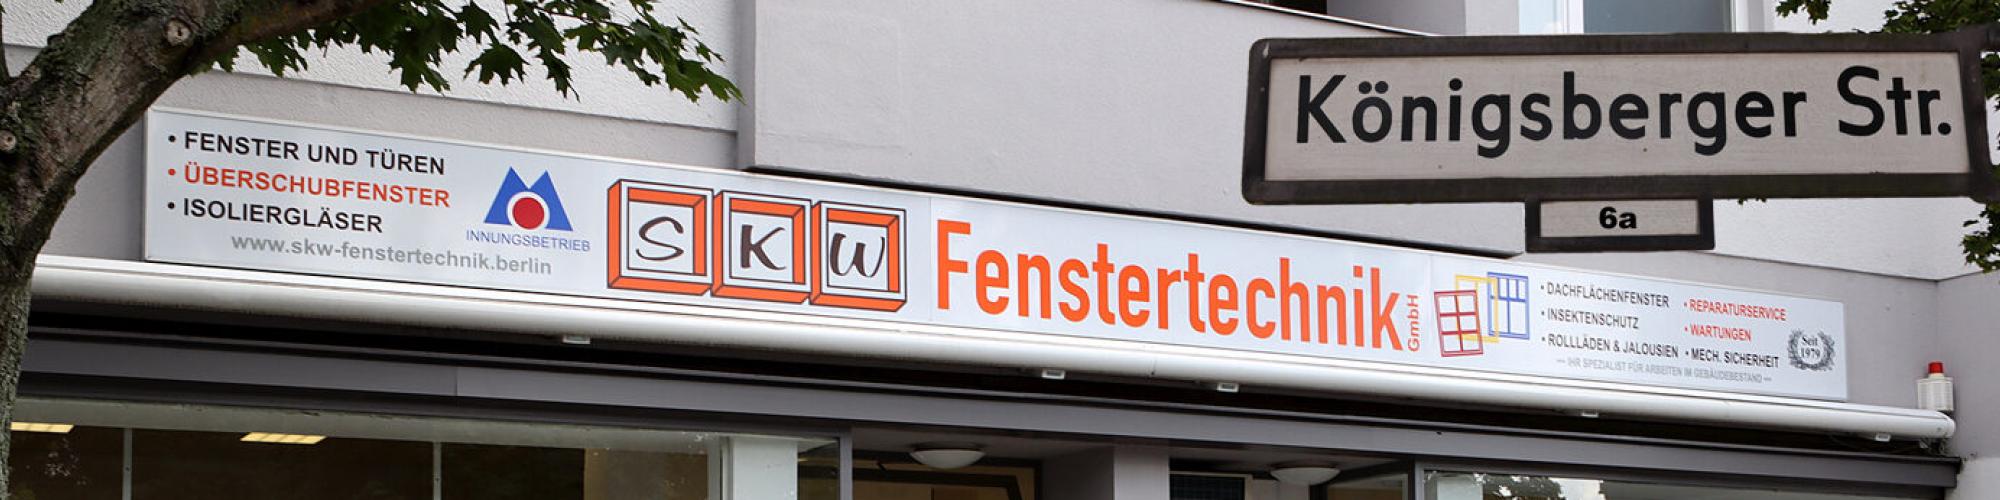 SKW Fenstertechnik GmbH